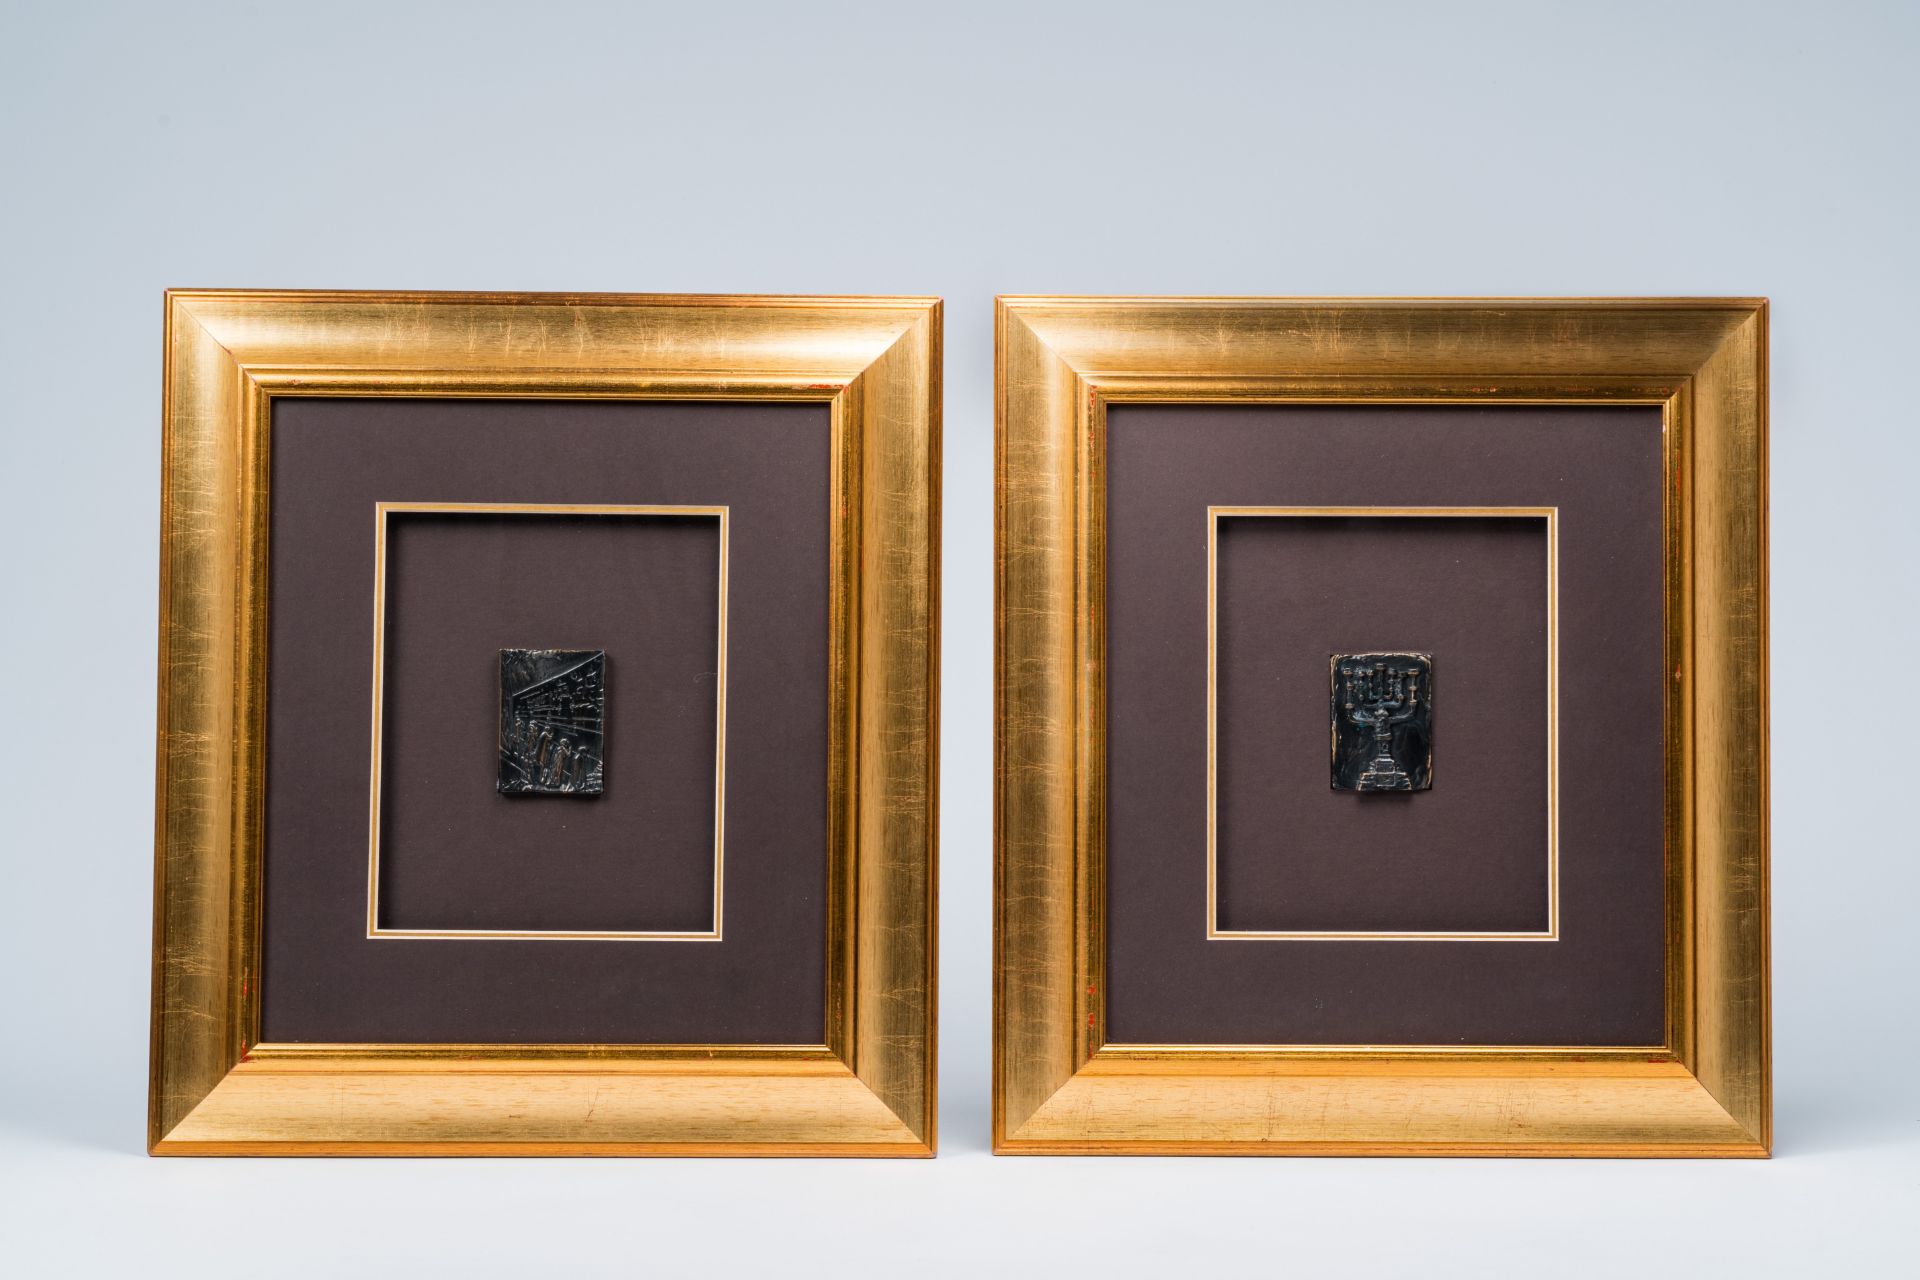 Salvador Dali (1904-1989, after): 'Jerusalem' and 'Menorat Hashalom', two bronze plaques